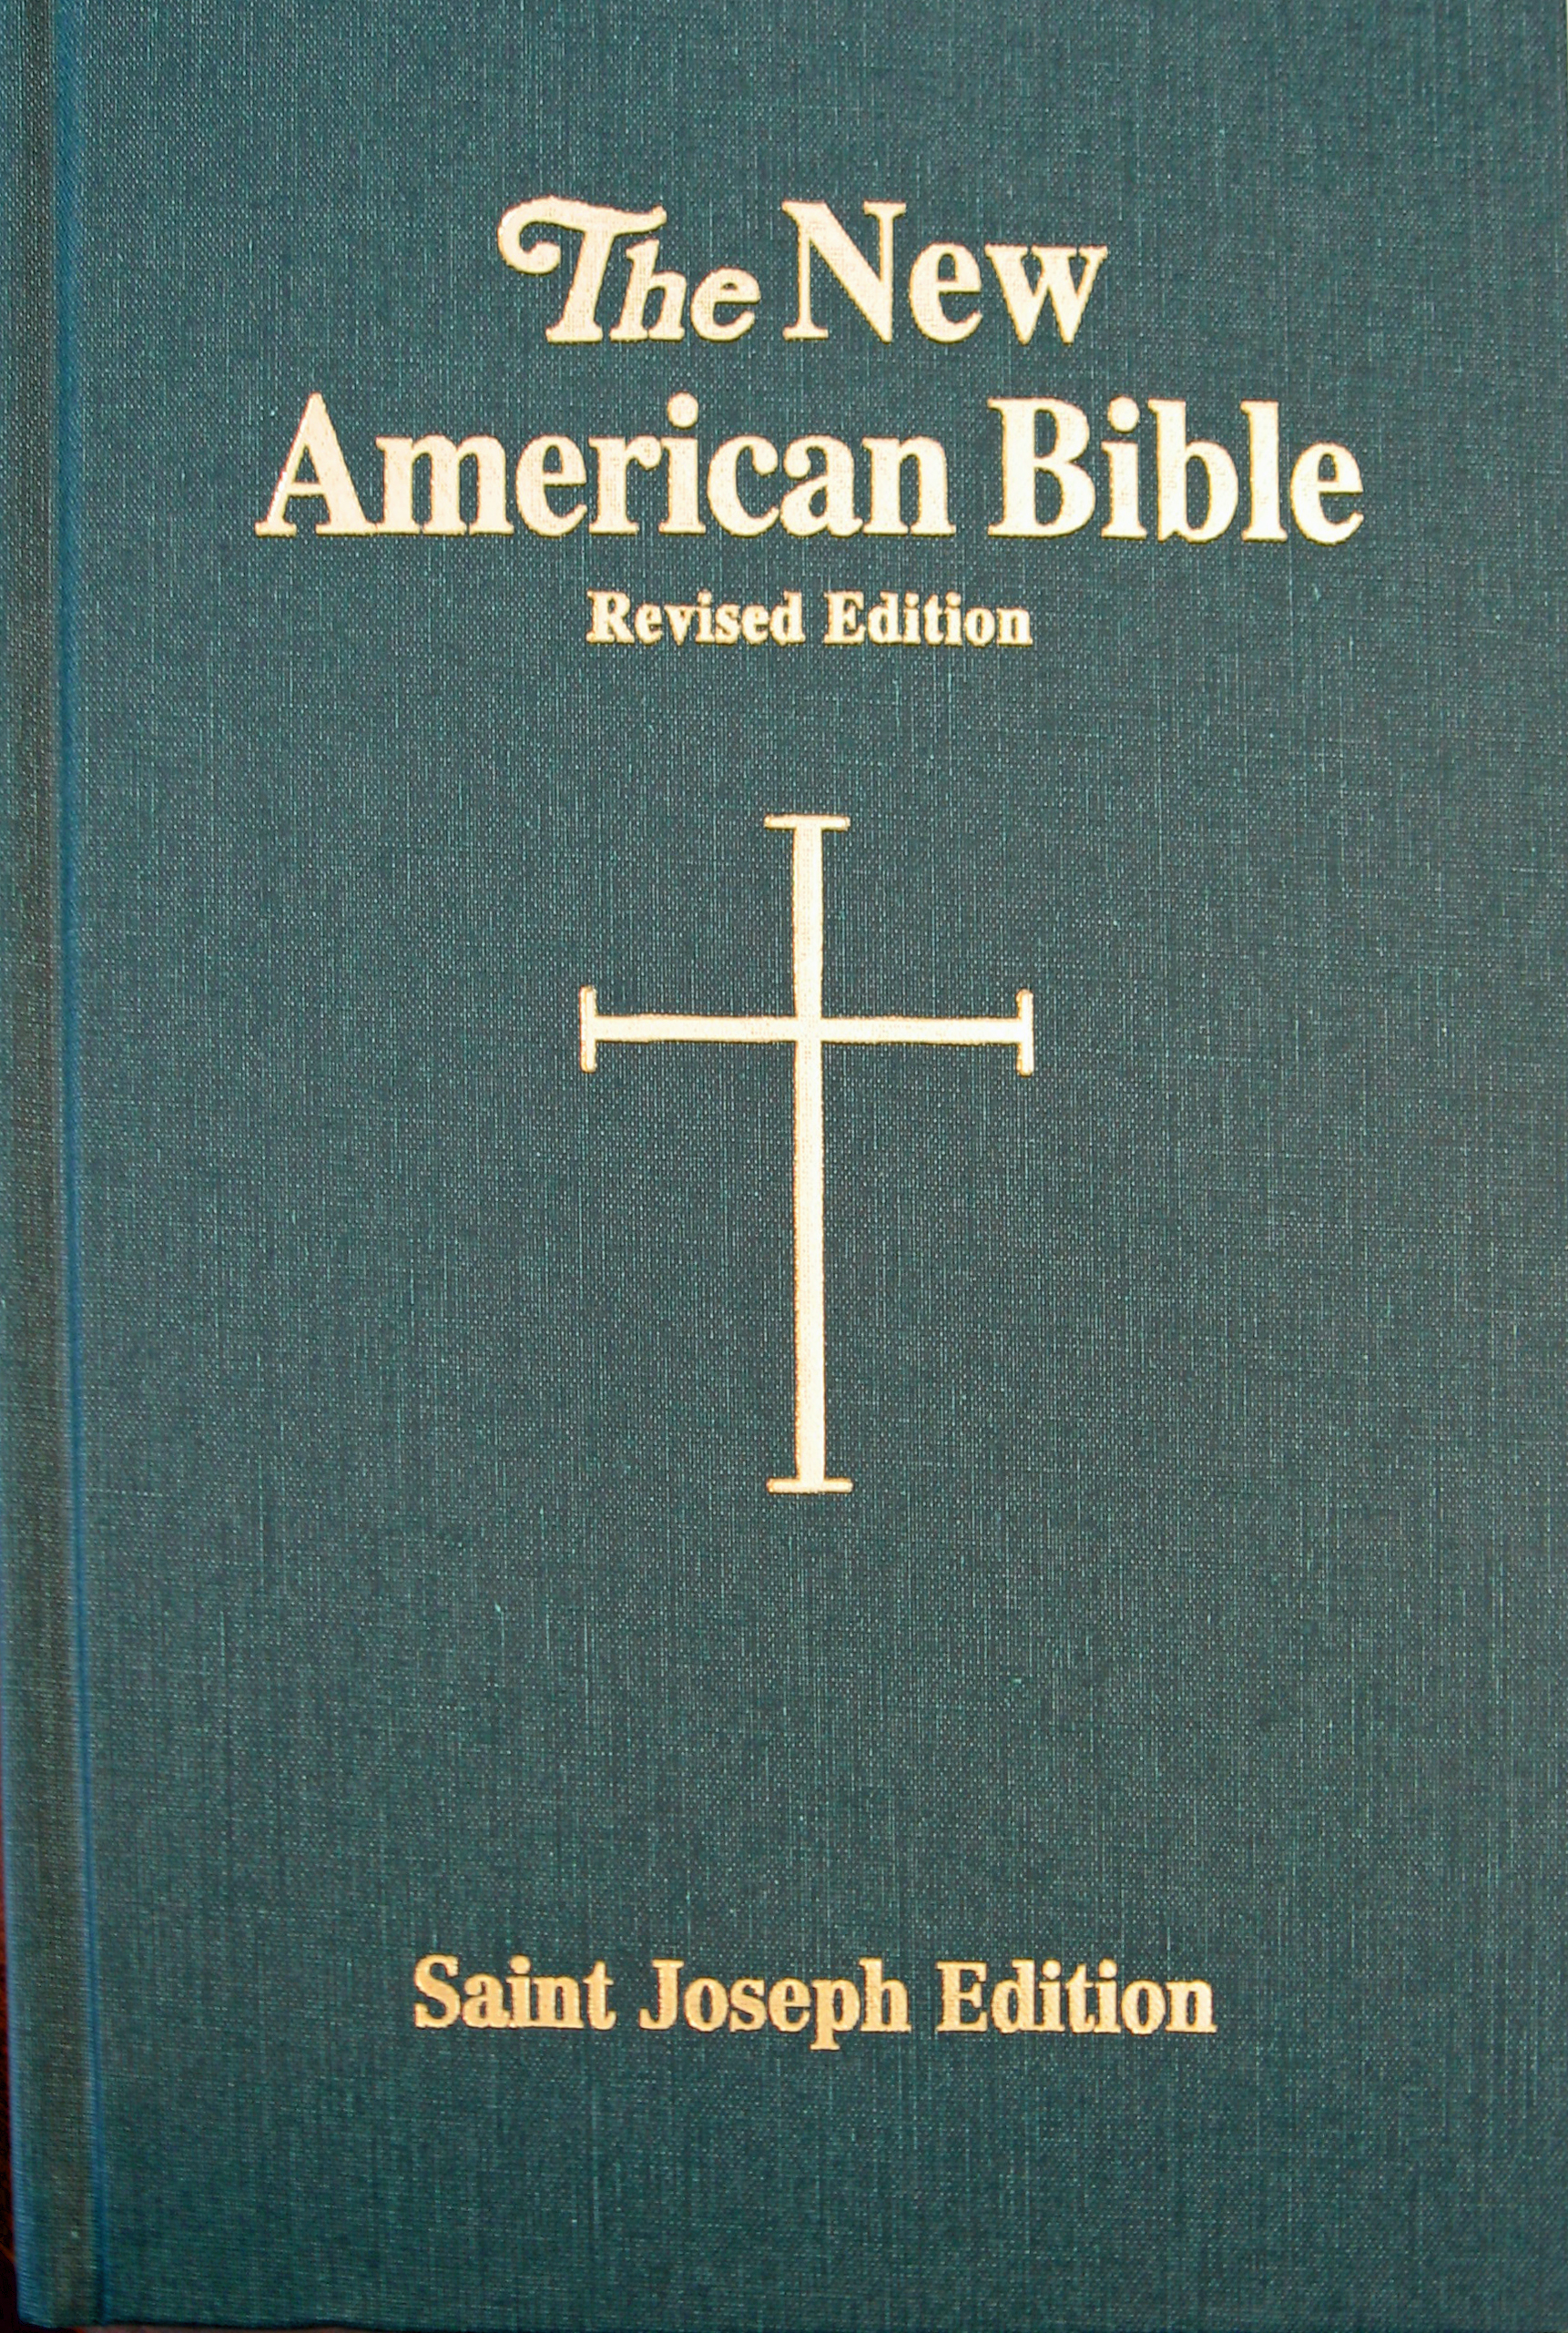 St. Joseph NABRE Full Size Student Ed. Green Hardcover Bible 9780899429632 611/67GN